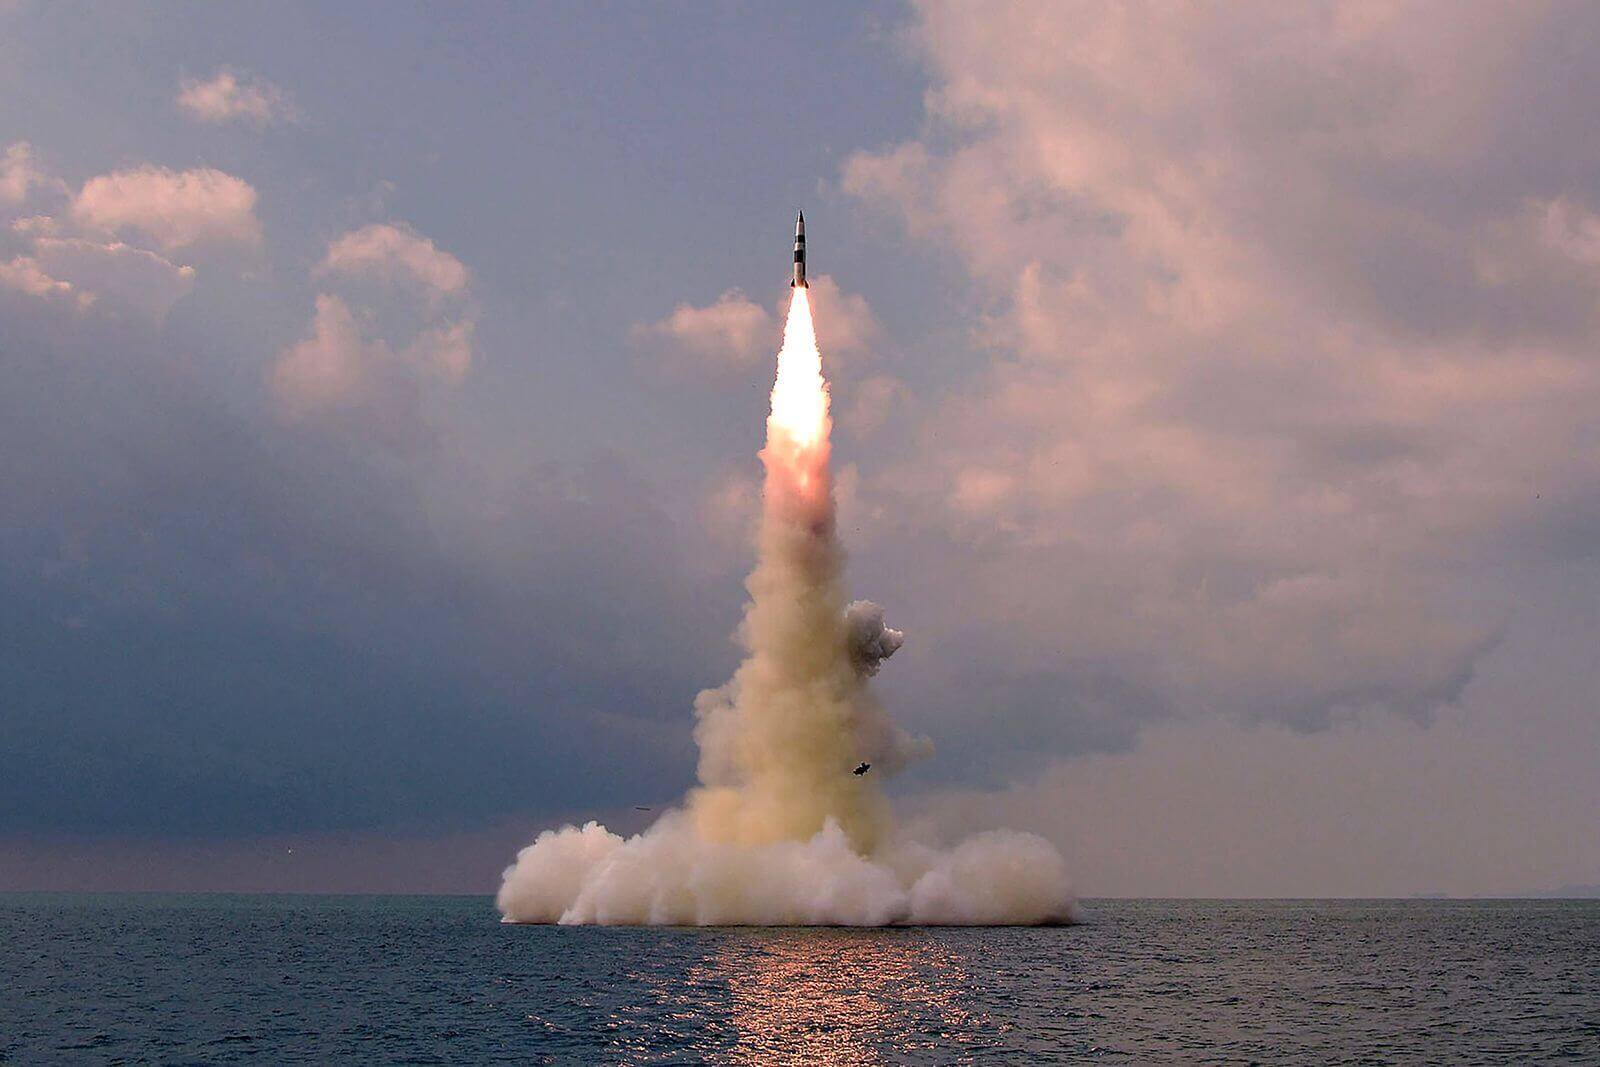 S. Korea Issues Air Raid Alert After N. Korea’s “Intolerable” Launch of Ballistic Missiles